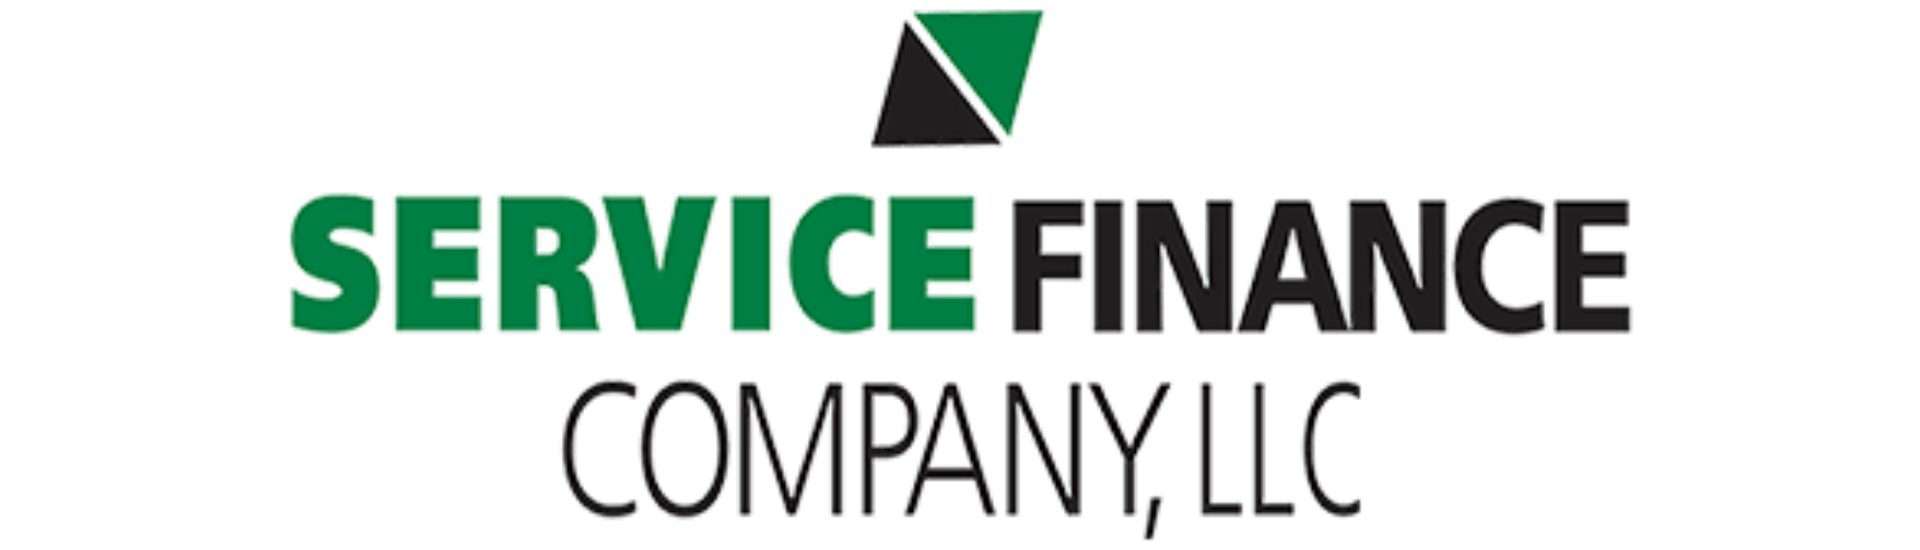 Service Finance Company Logo